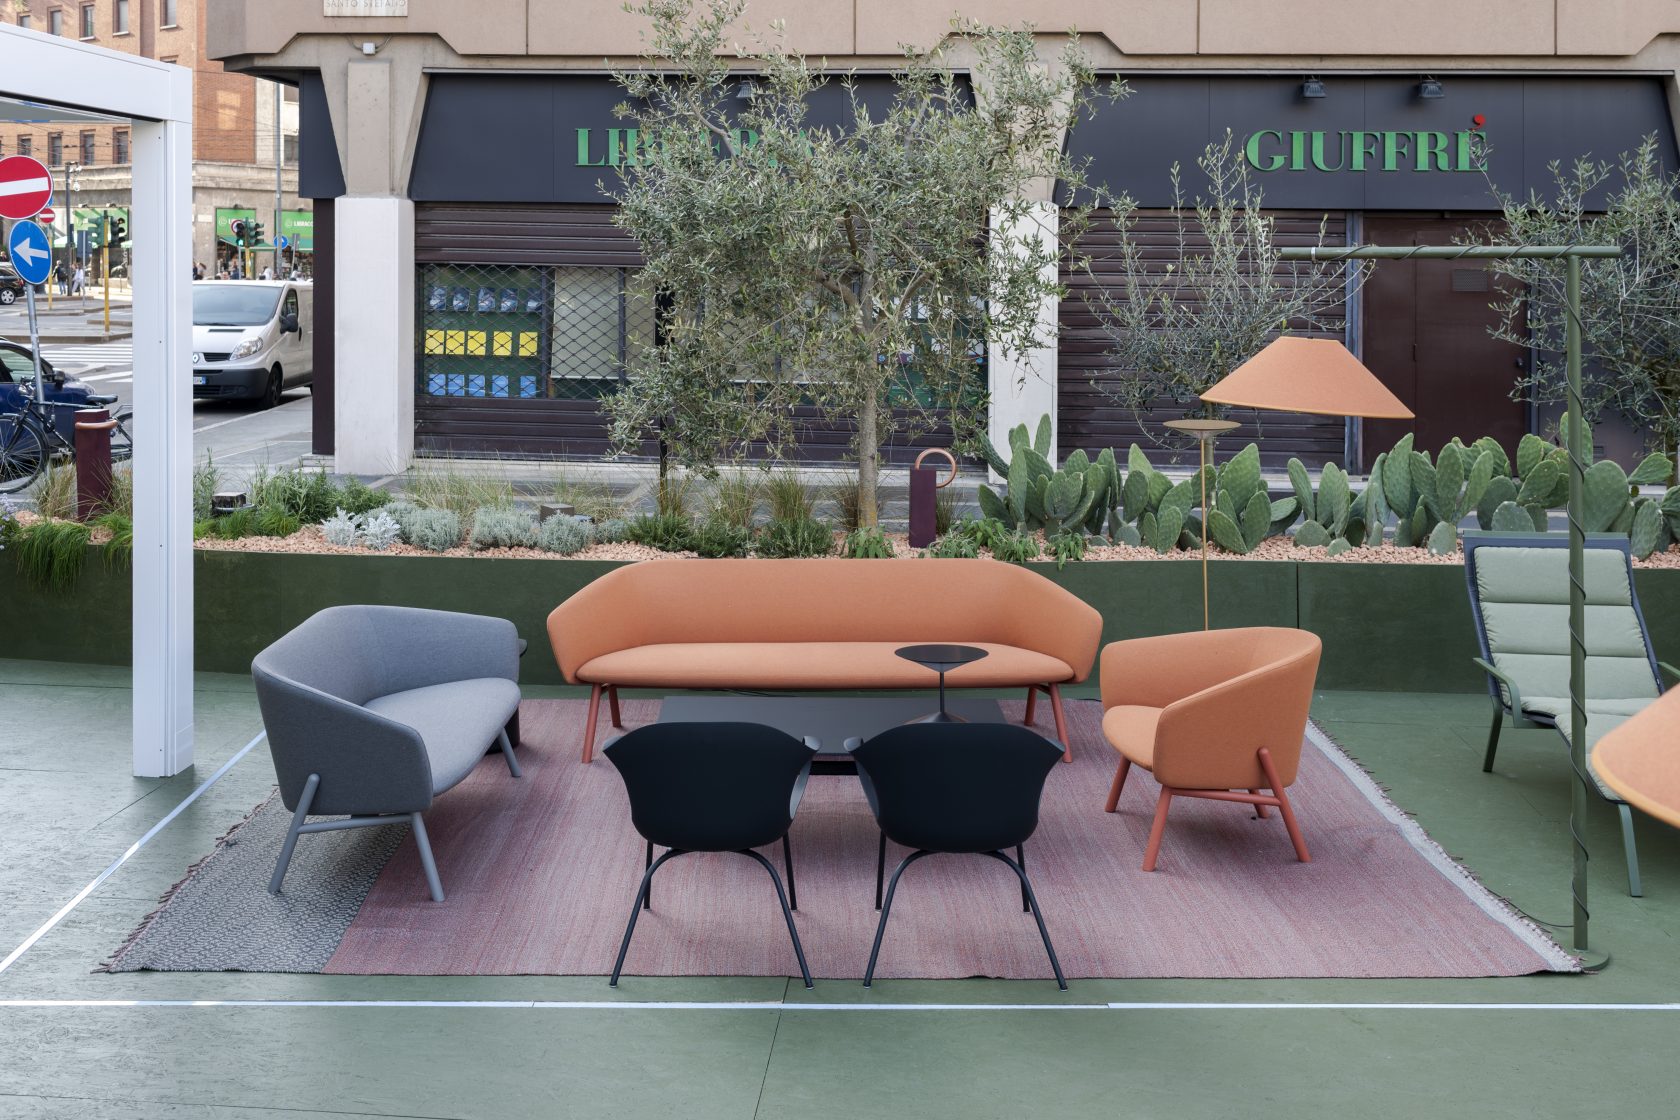 Milan design week: outdoor furniture installation